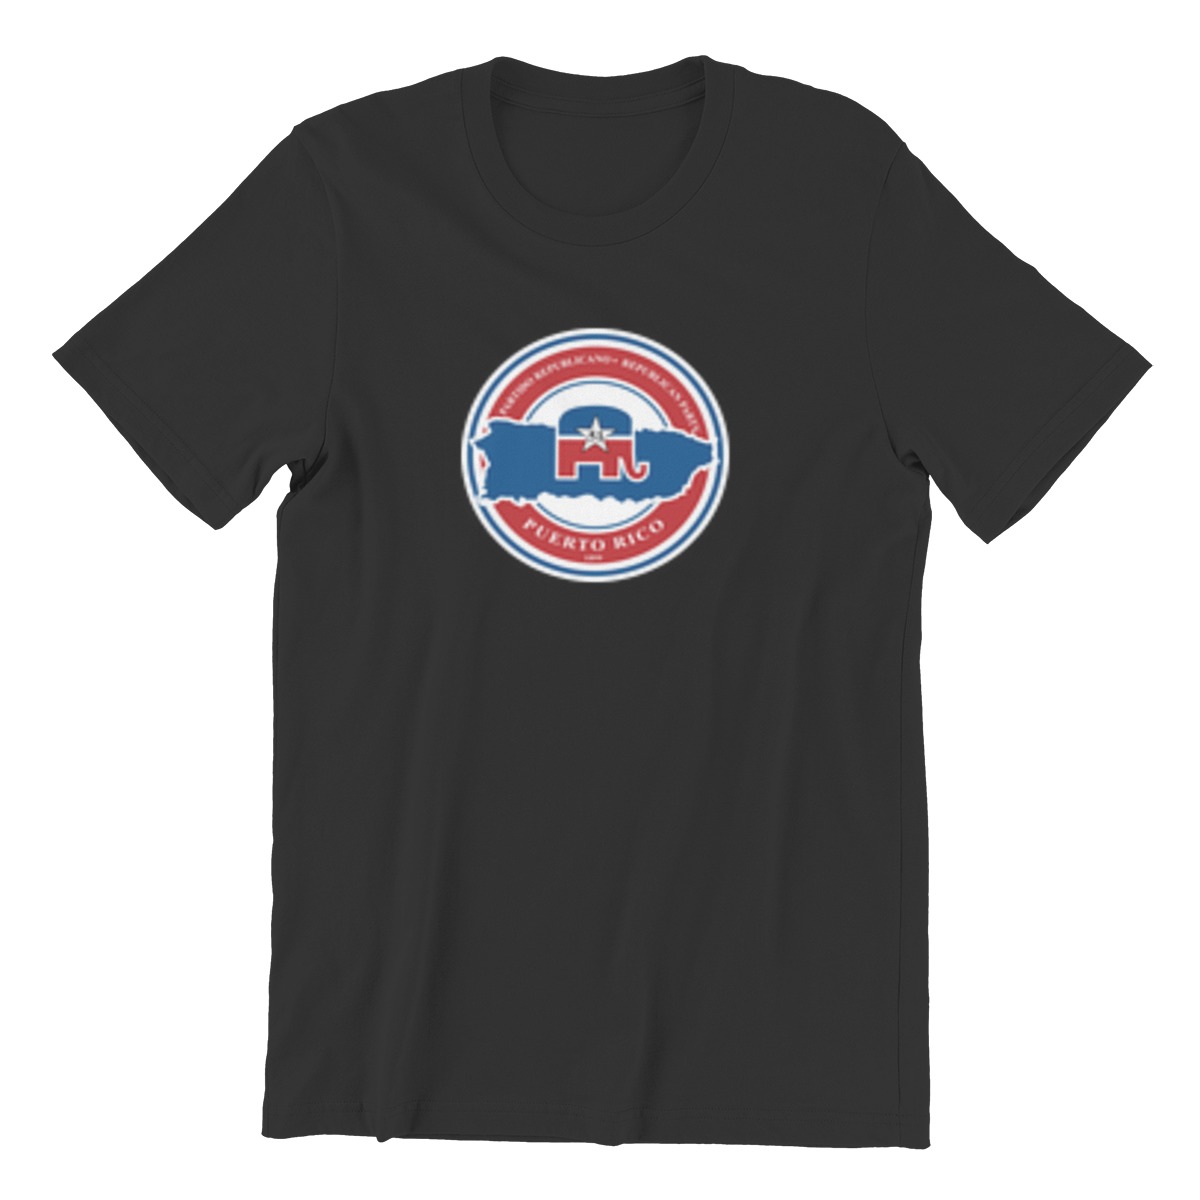 Harris funny Men's T Shirt Novelty Tops Bitumen Bike Life Tees Clothes Cotton Printed T-Shirt Plus Size T-shirt 3291